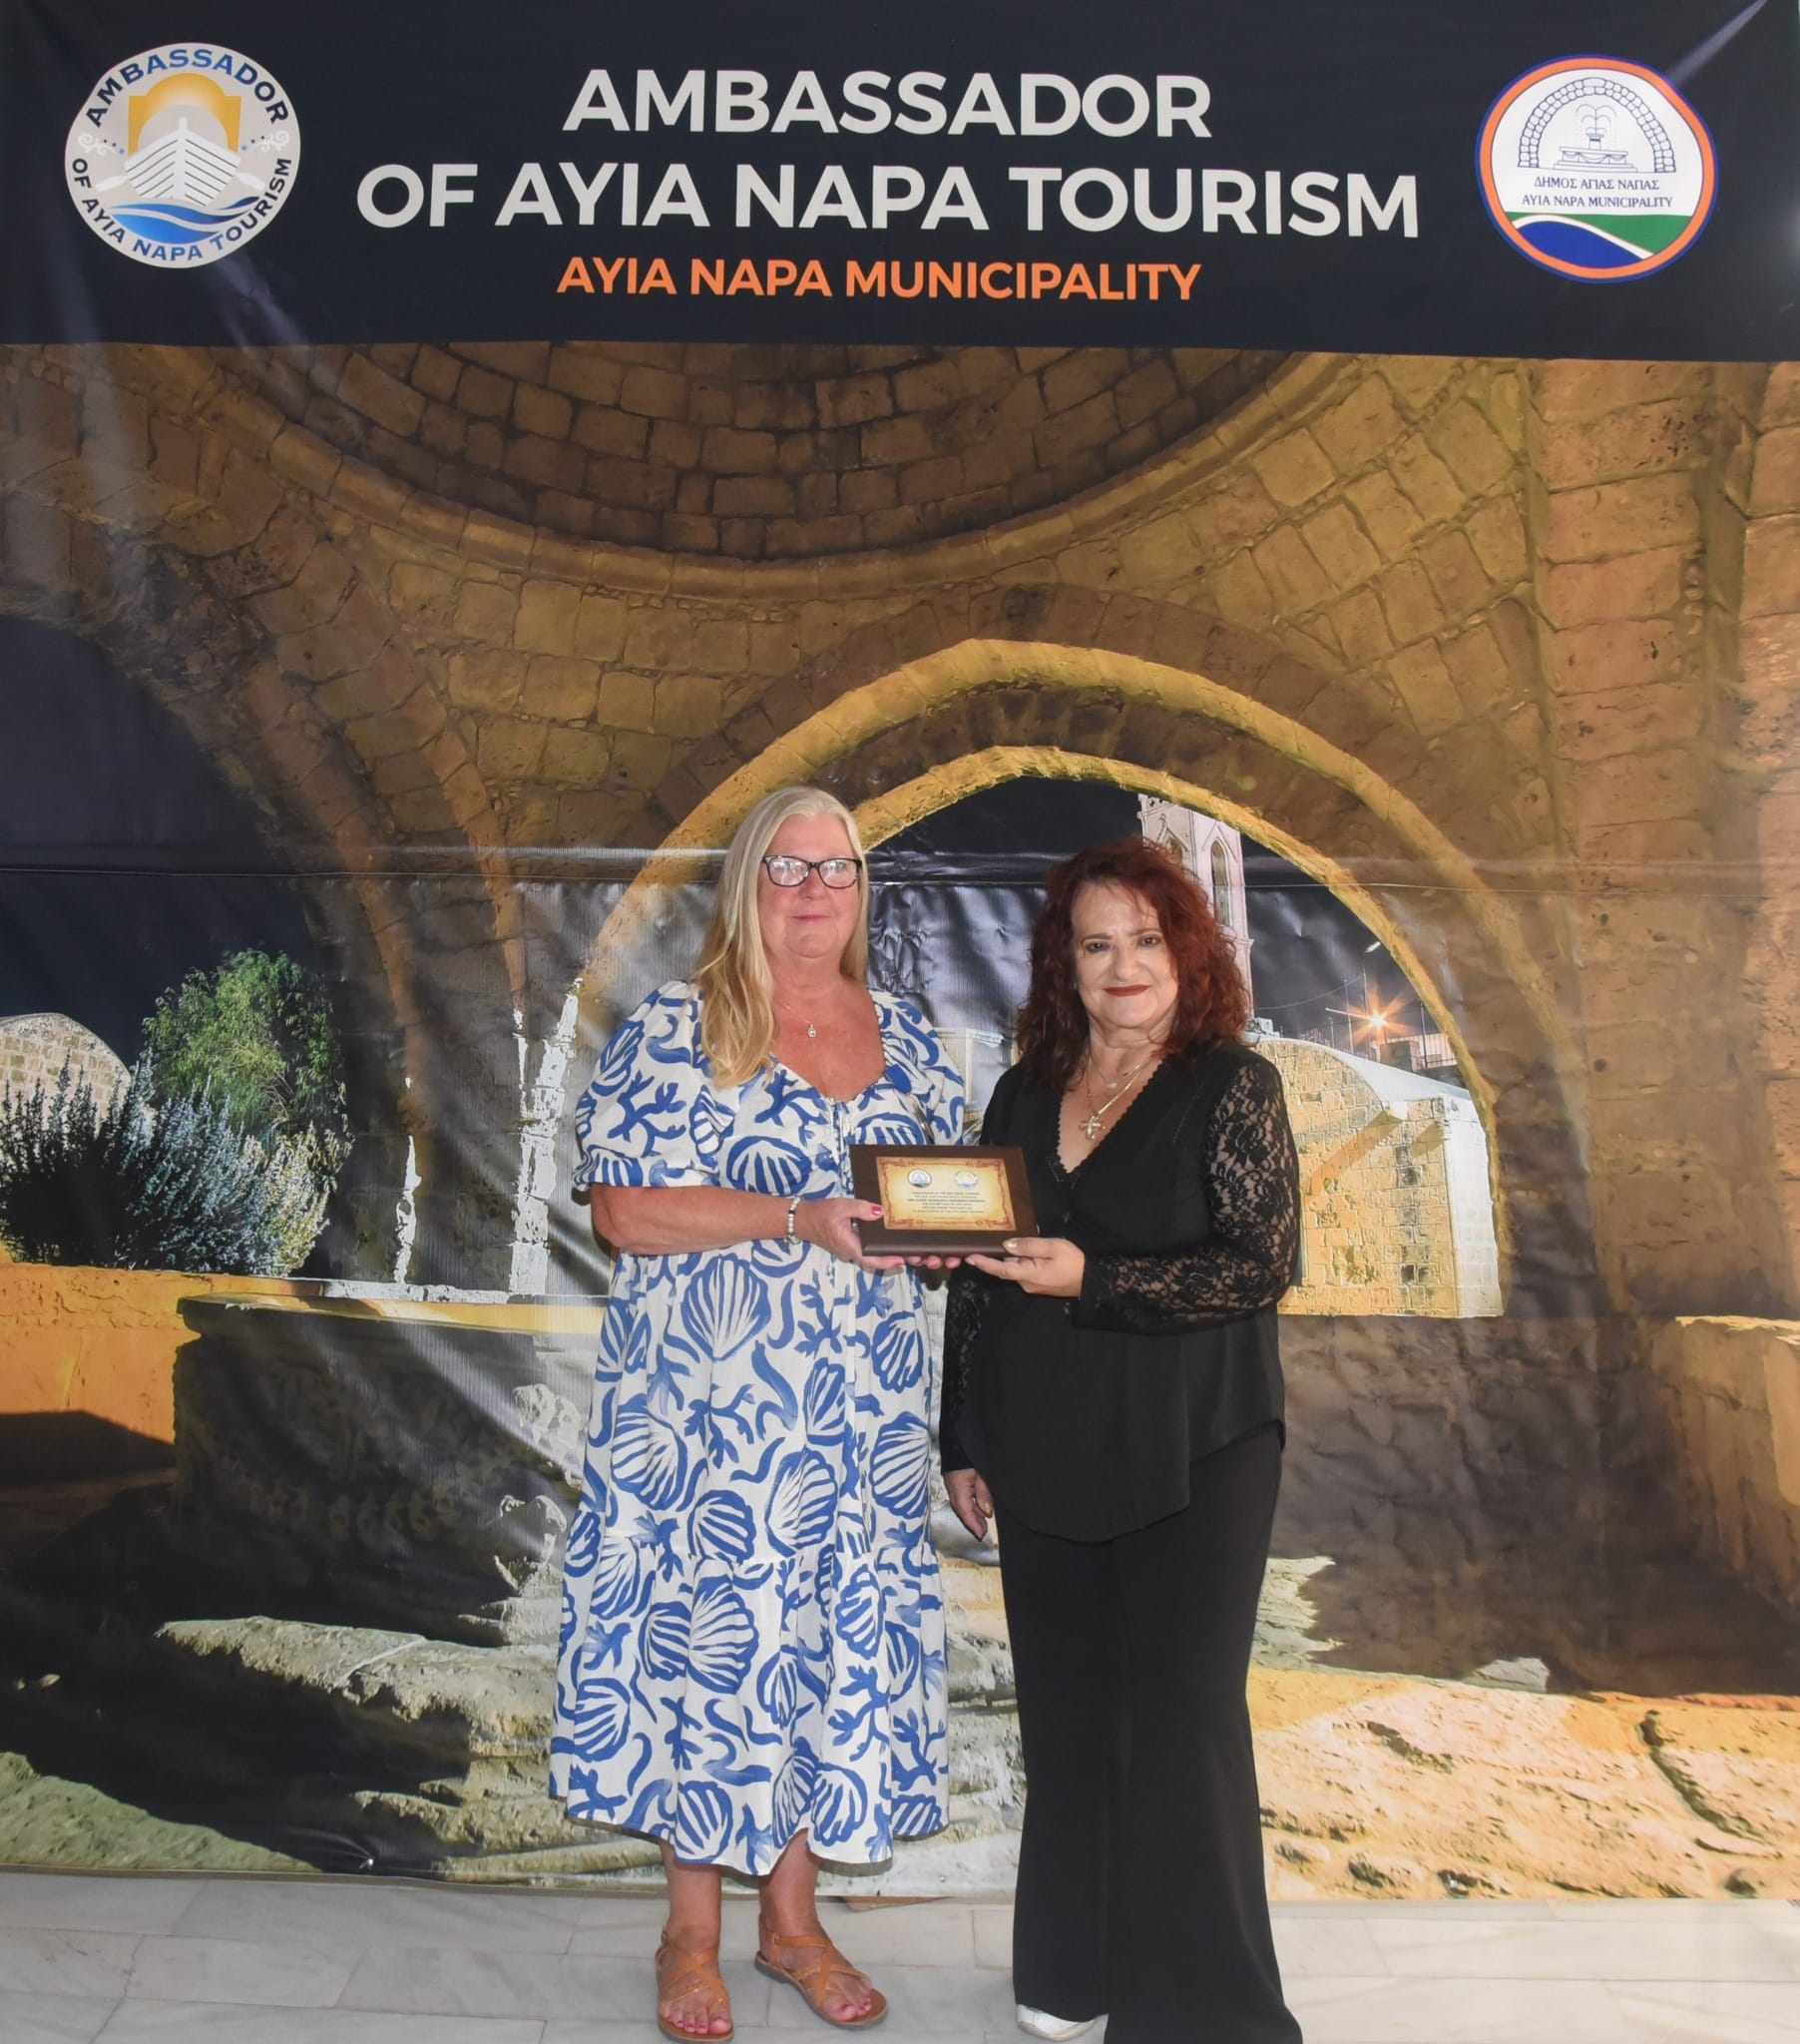 406430495 372138392012581 276437045318193133 n "Ambassador of Tourism", AYA NAPA